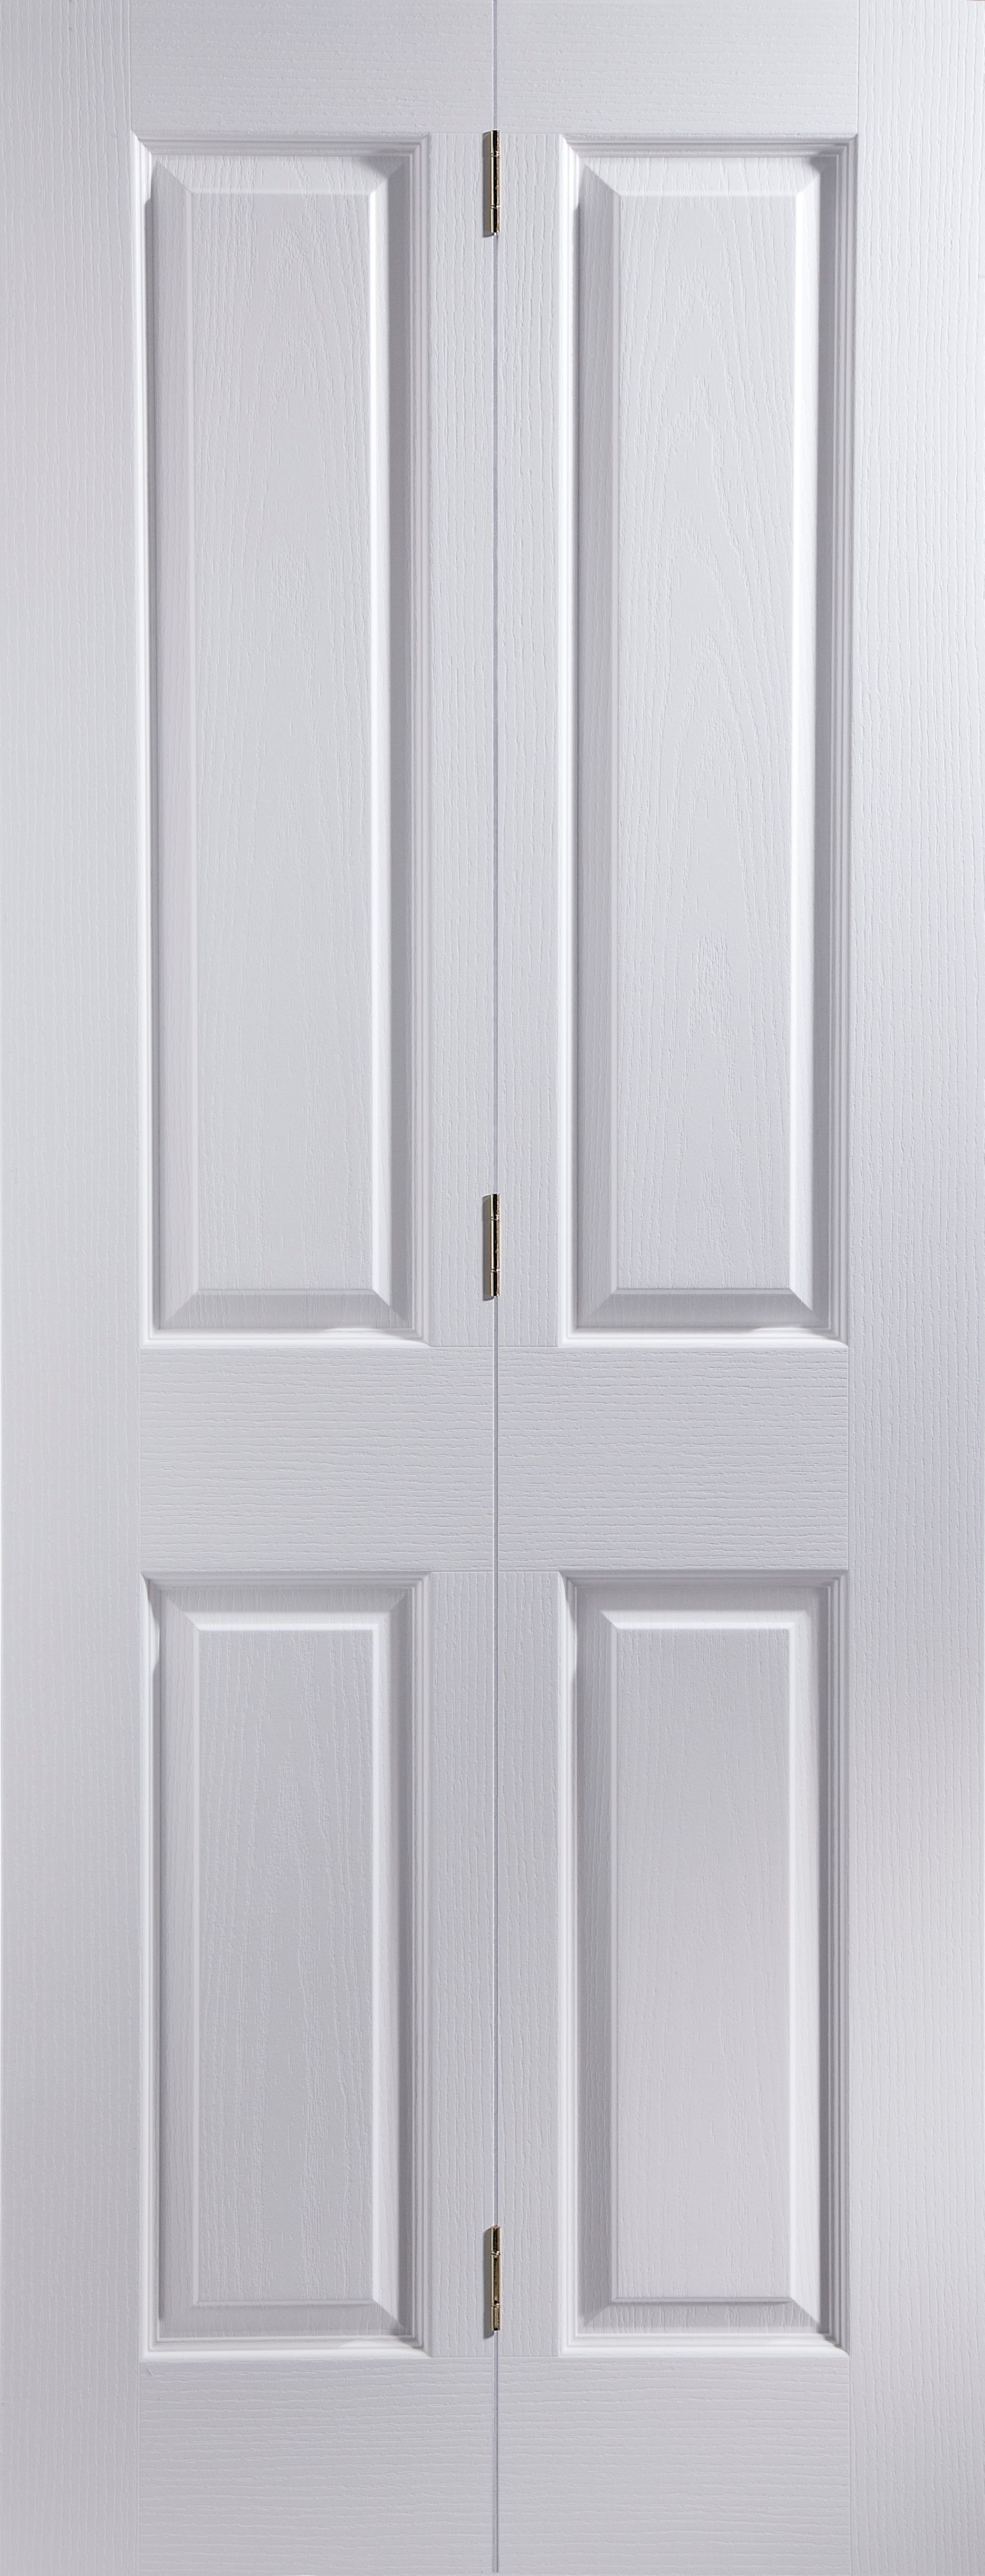 4 panel Unglazed Contemporary White Woodgrain effect Internal Bi-fold Door set, (H)1981mm (W)610mm